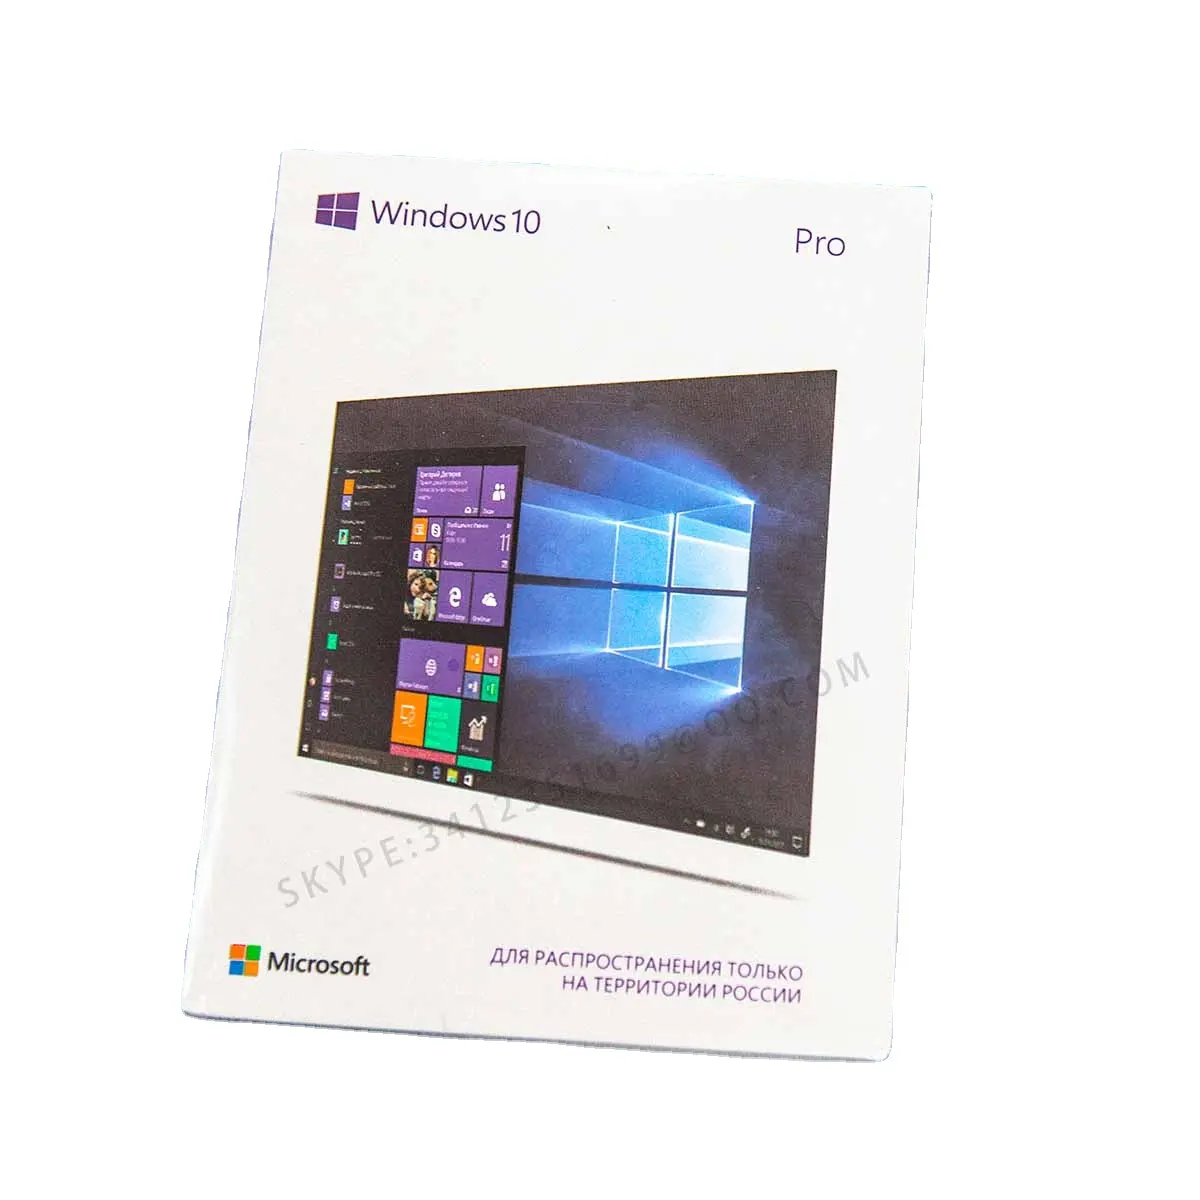 Windows 10 Professinal Win10pro USB 3.0 full package DHL free shipping Windows 10 Pro retail FPP Box